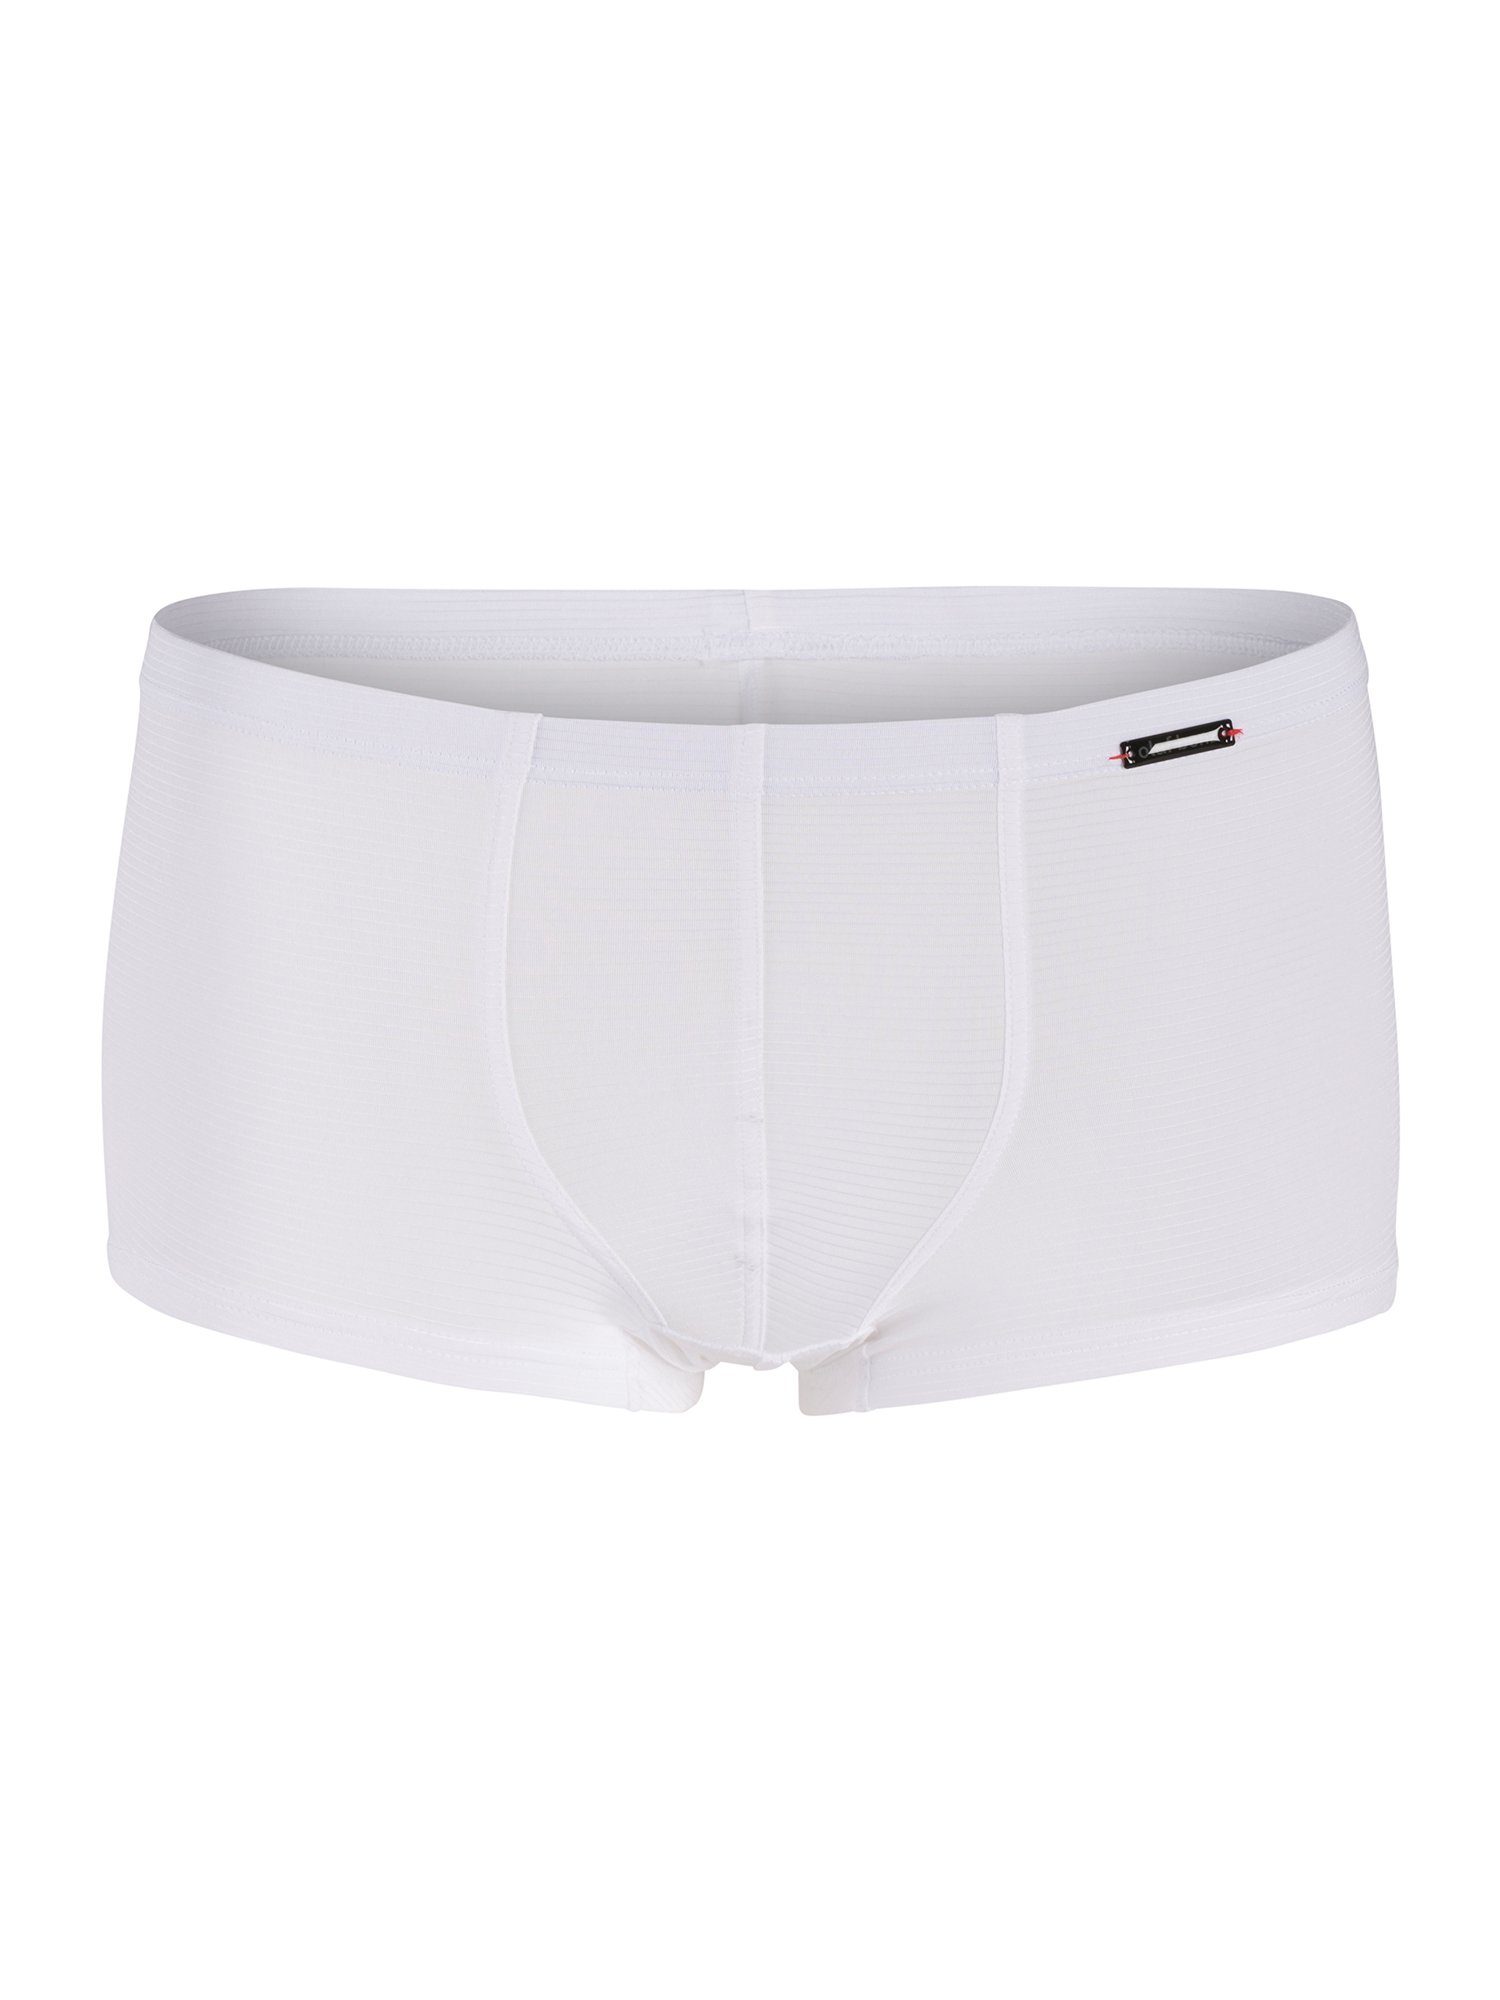 Olaf Minipants Benz (3-St) unterhose Pants Retro-shorts Retro weiss RED1201 Retro-Boxer